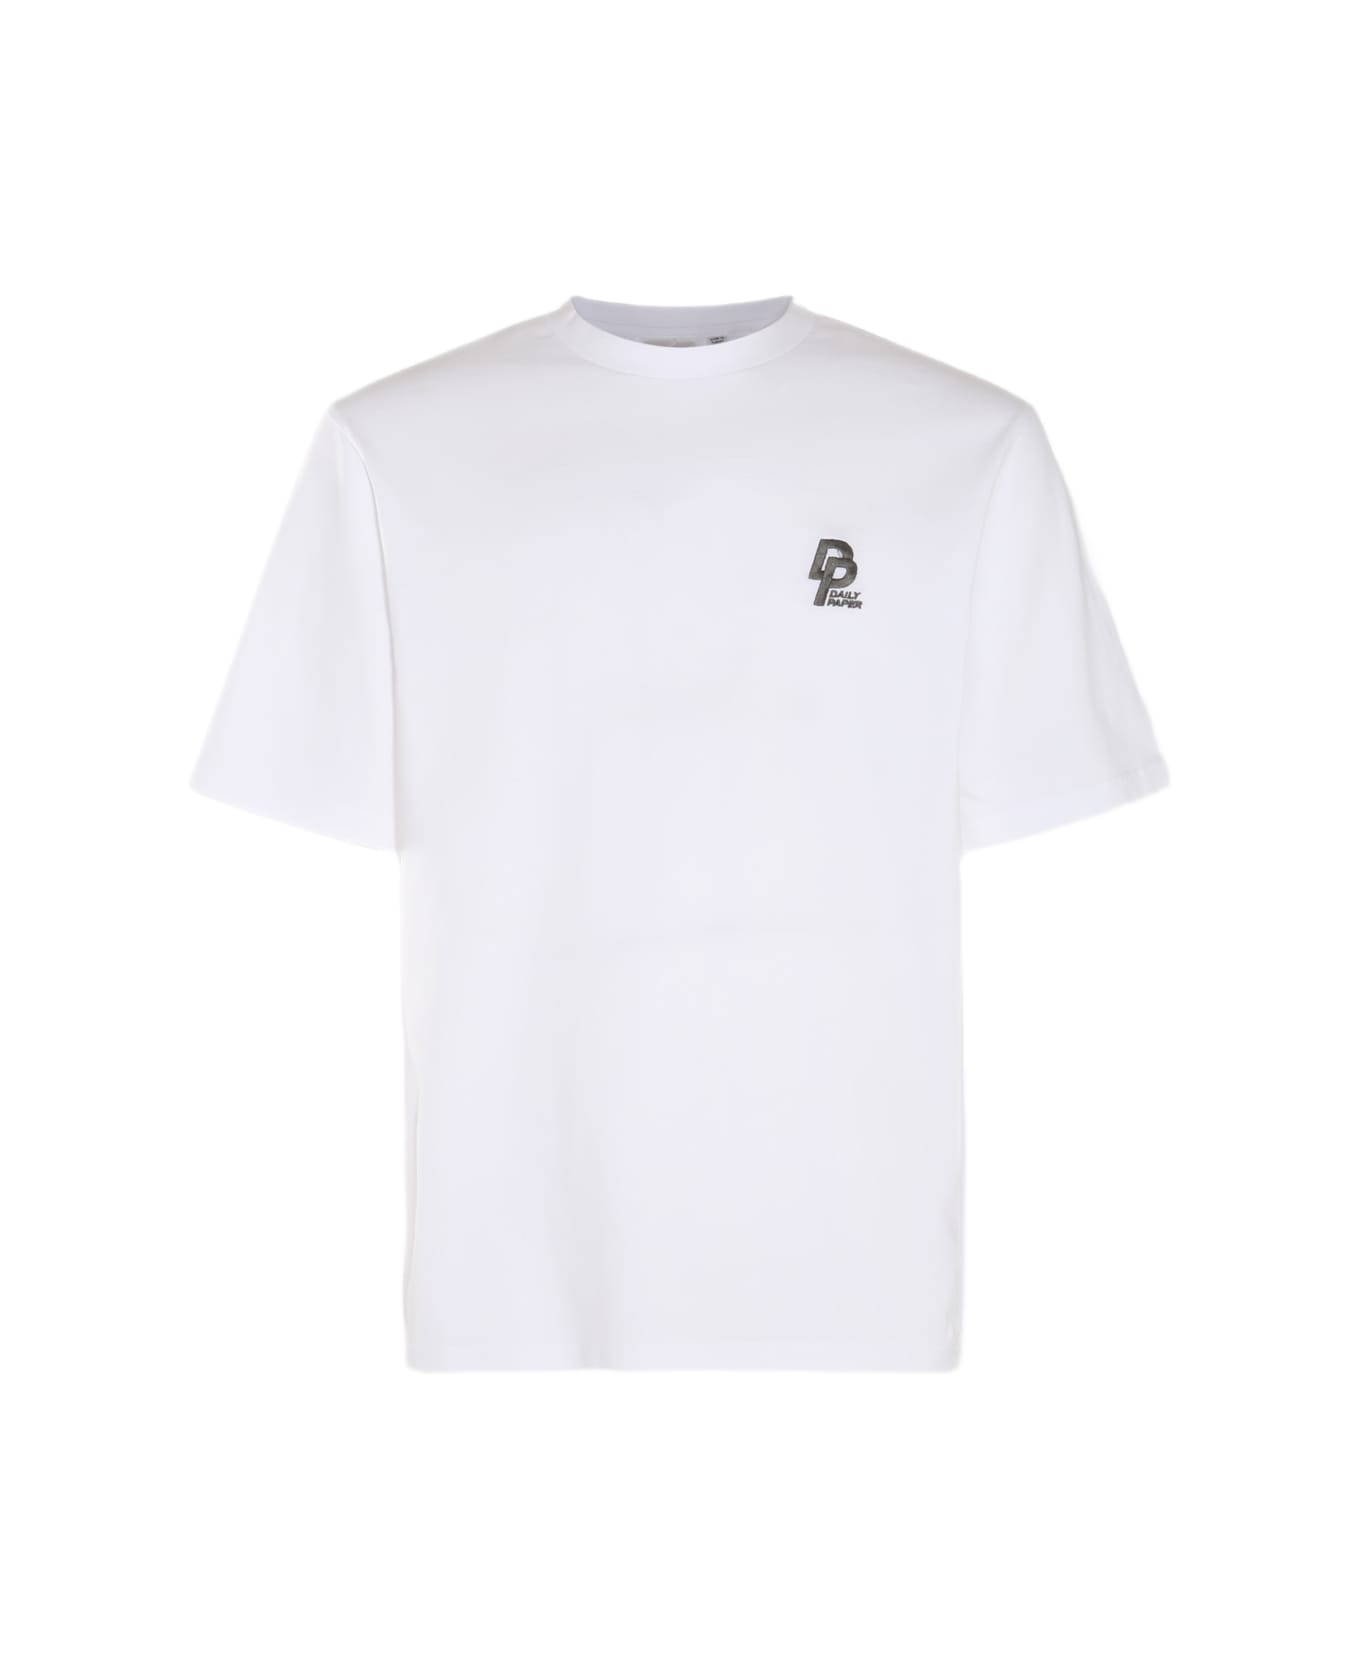 Daily Paper White Cotton T-shirt - White